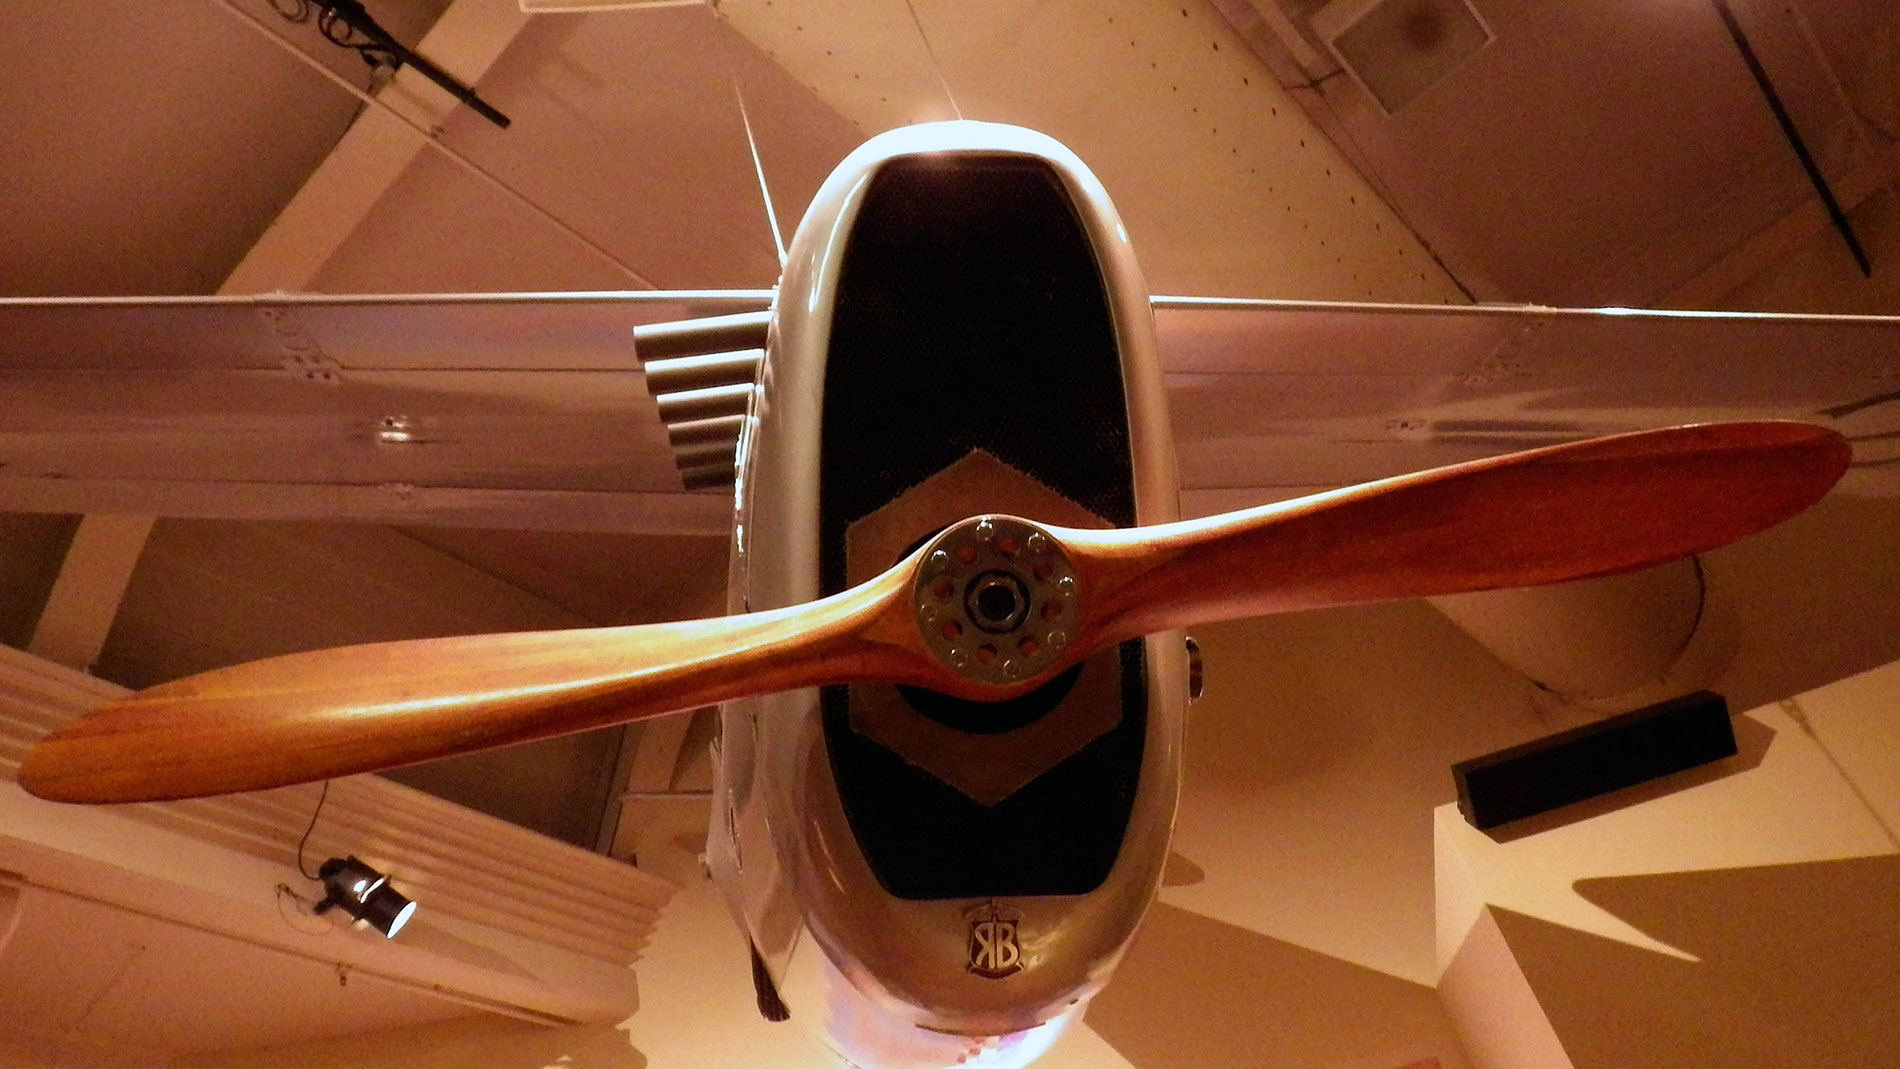 Racing plane, doomed pigeon's eye view.